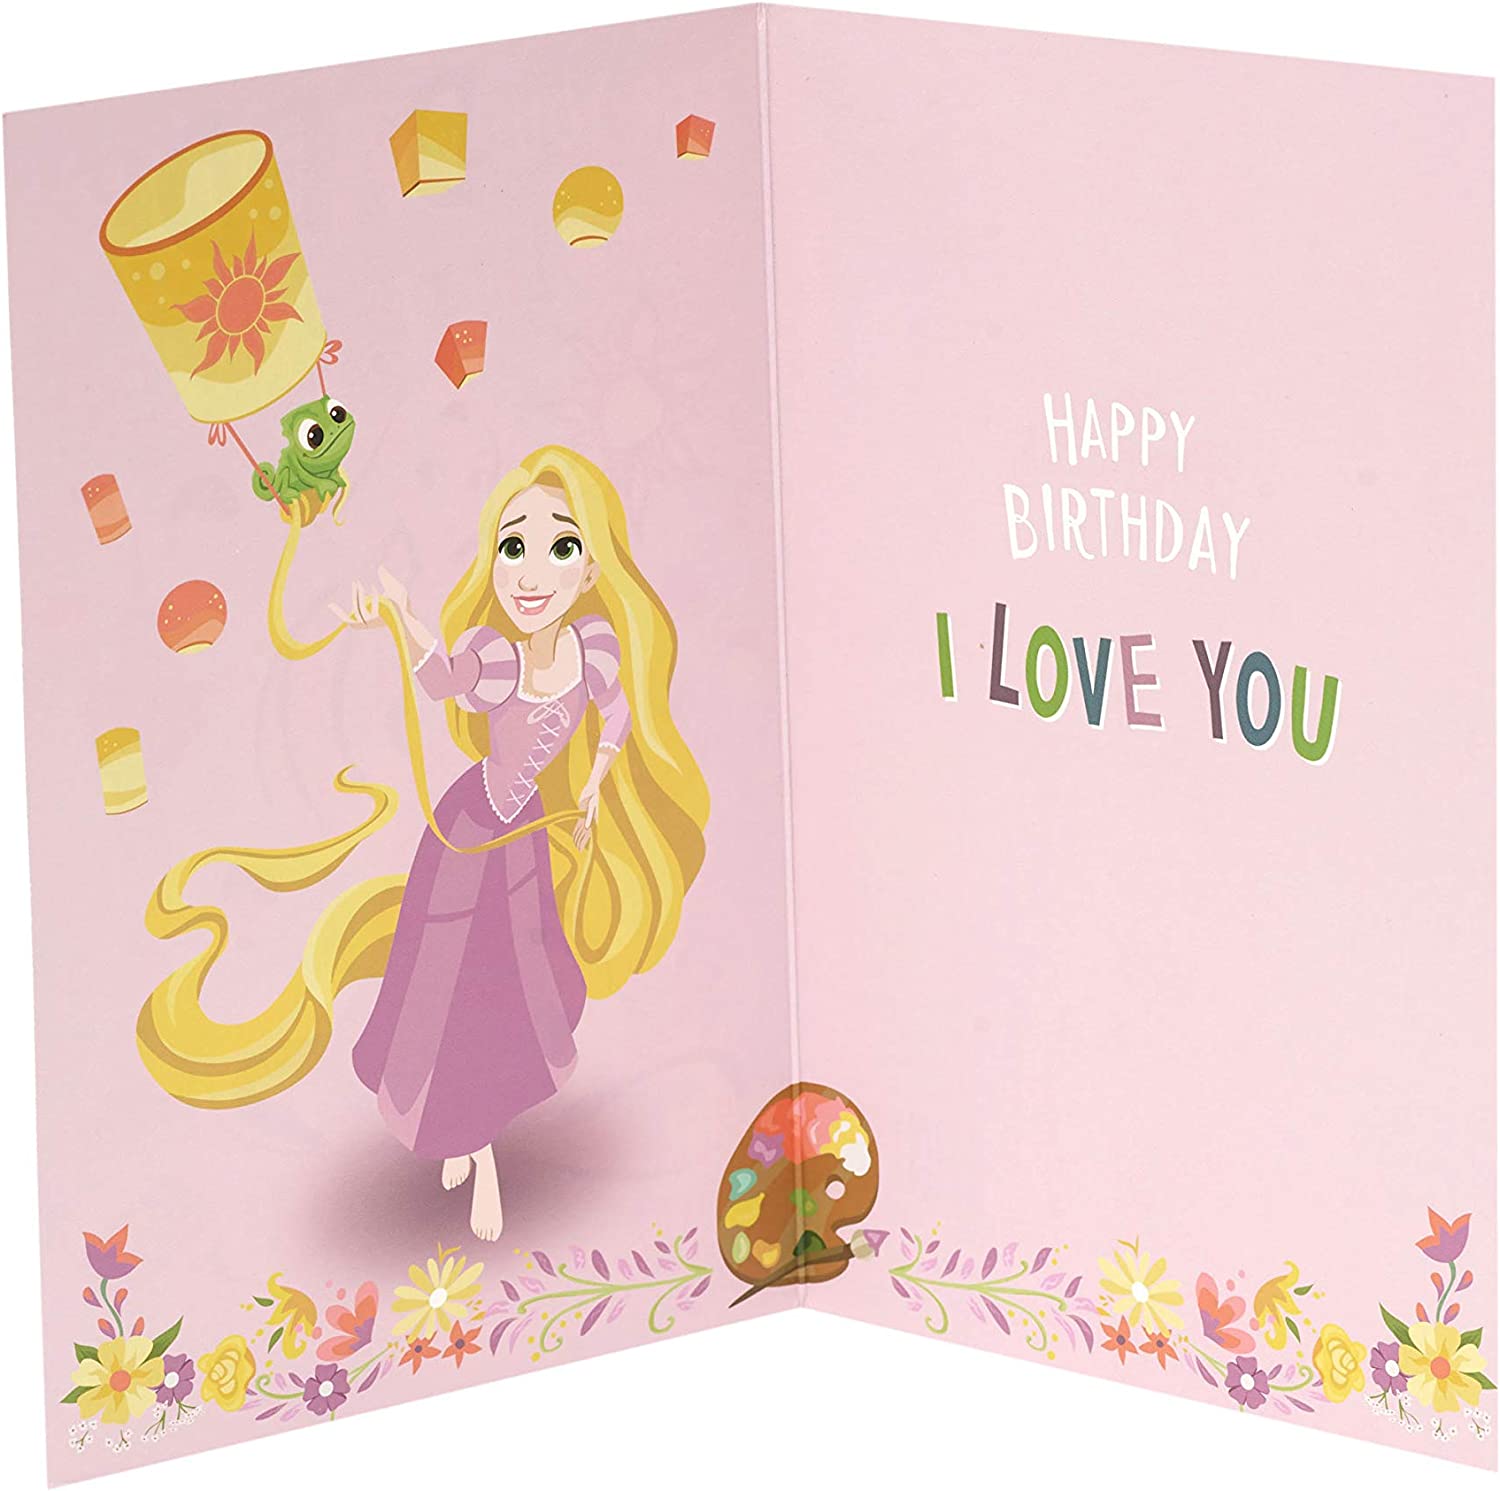 Daddy Birthday Card - Disney Princess Card From Daughter